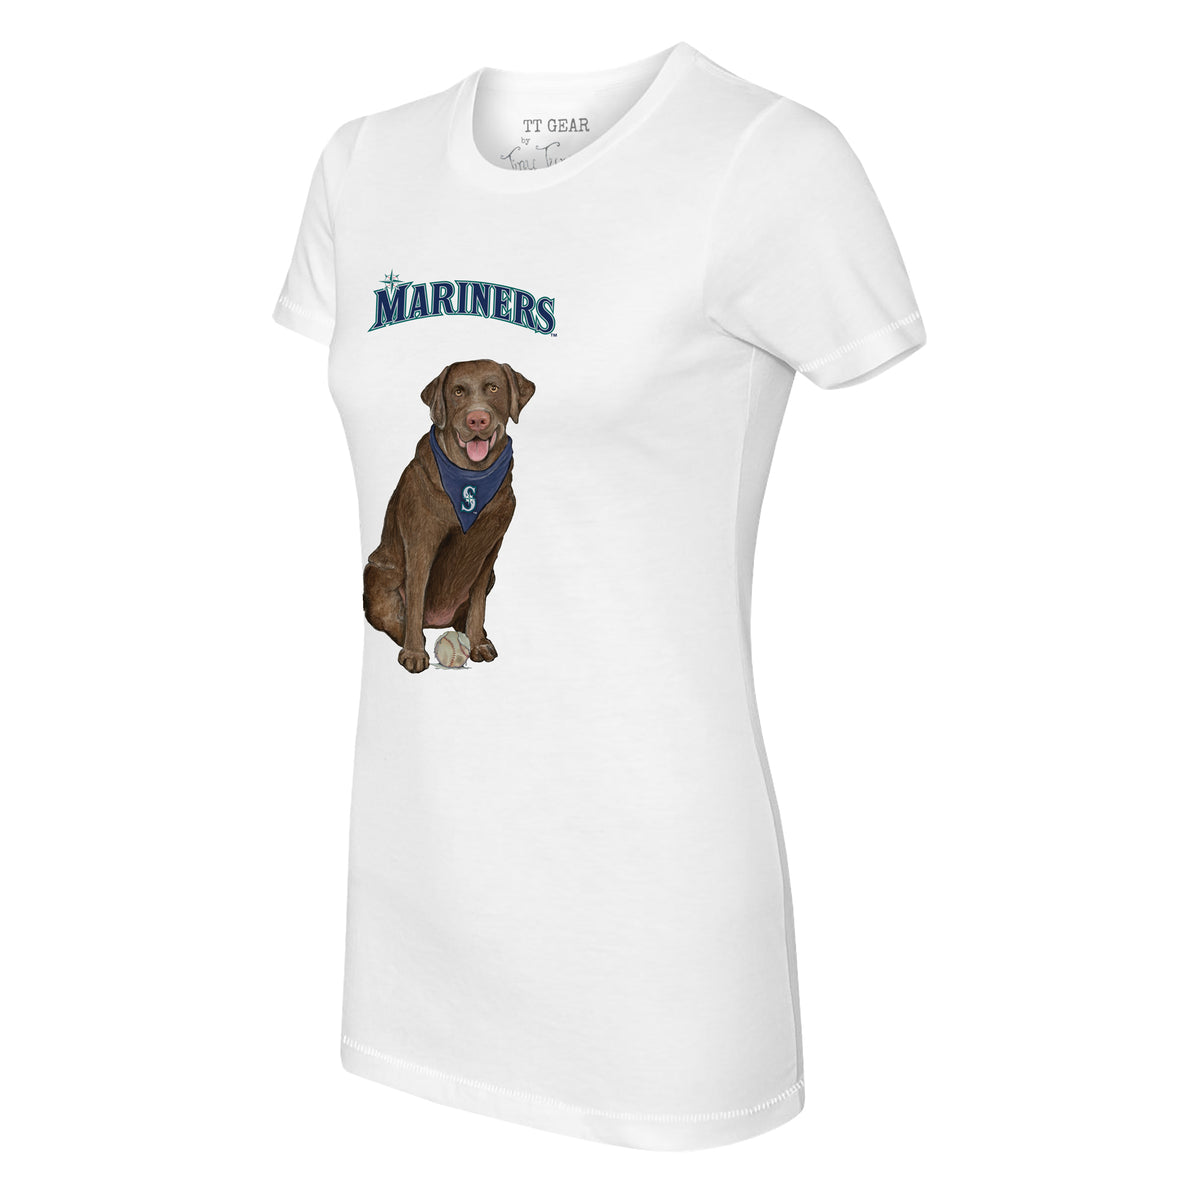 Seattle Mariners Chocolate Labrador Retriever Tee Shirt